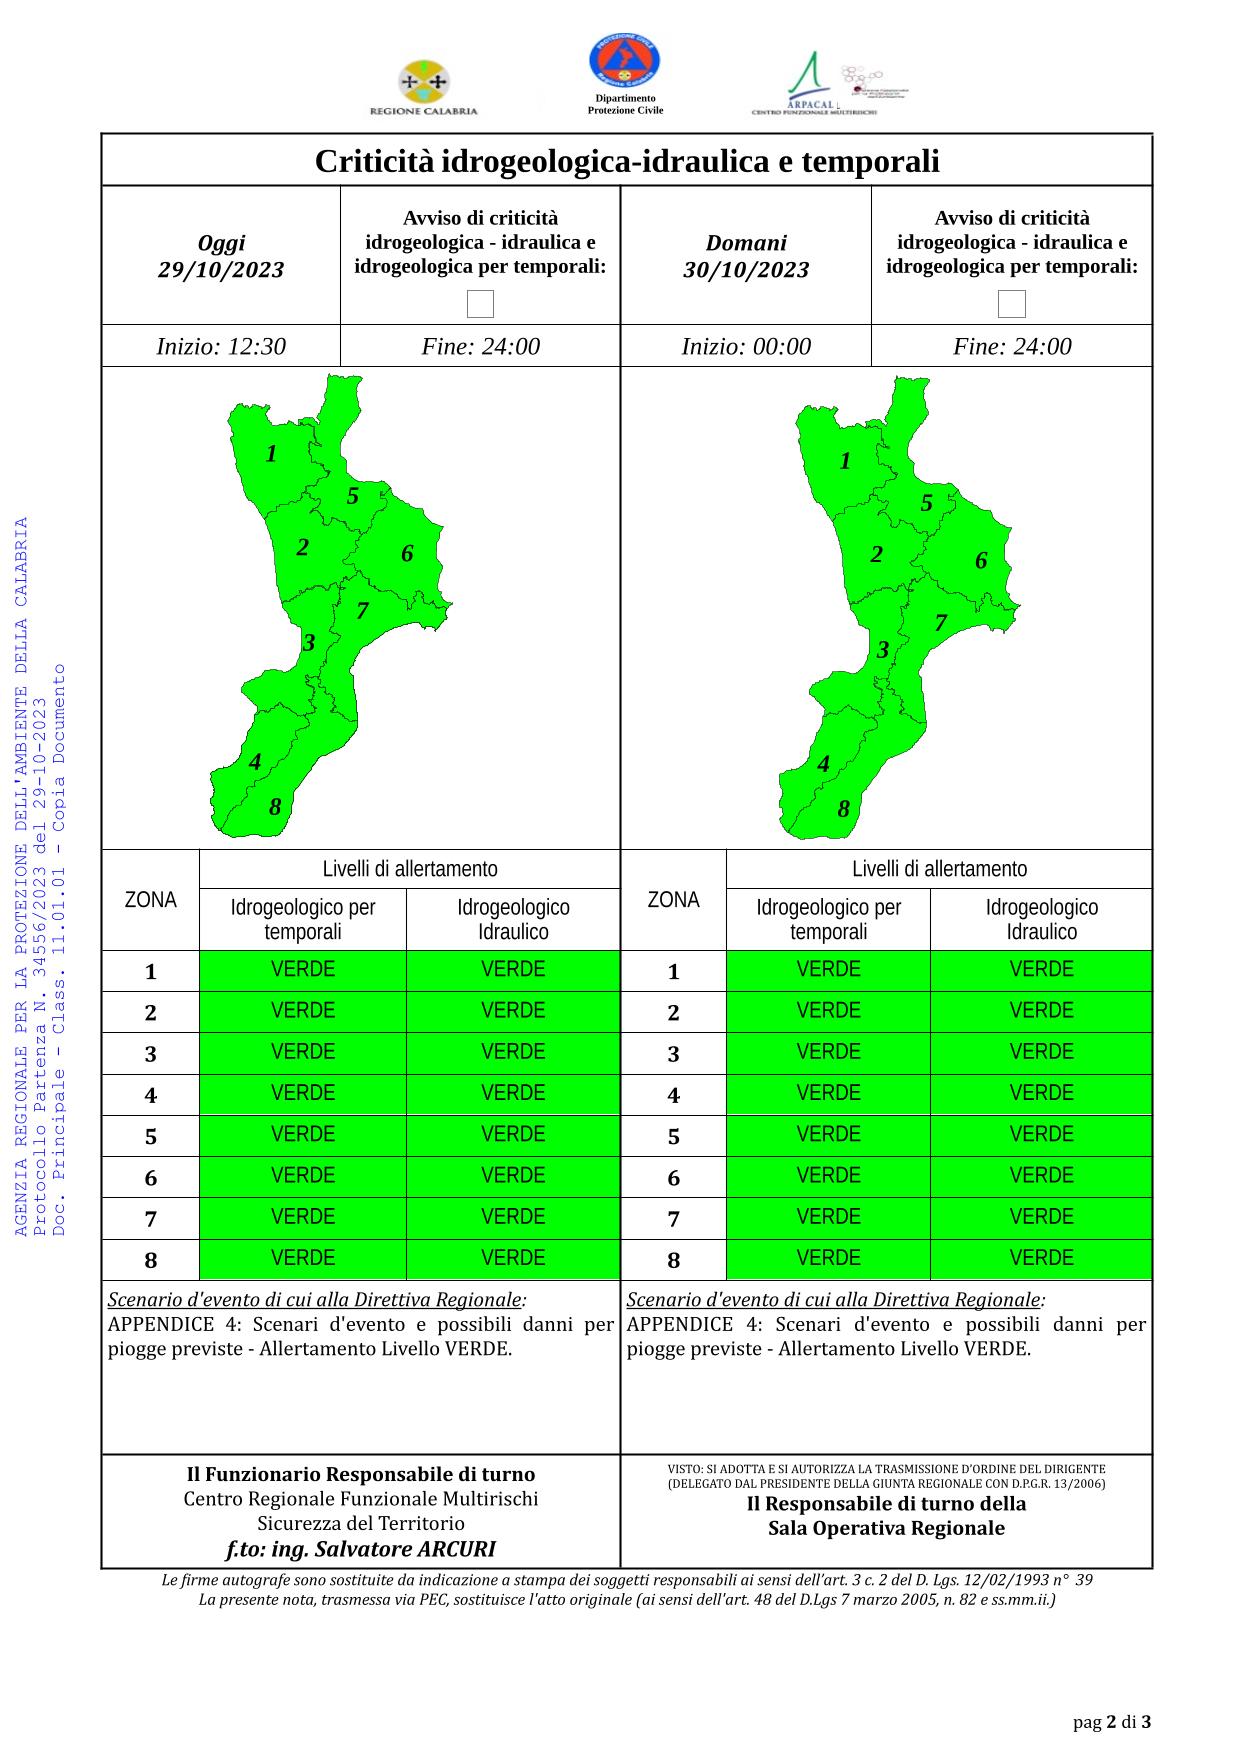 Criticità idrogeologica-idraulica e temporali in Calabria 29-10-2023